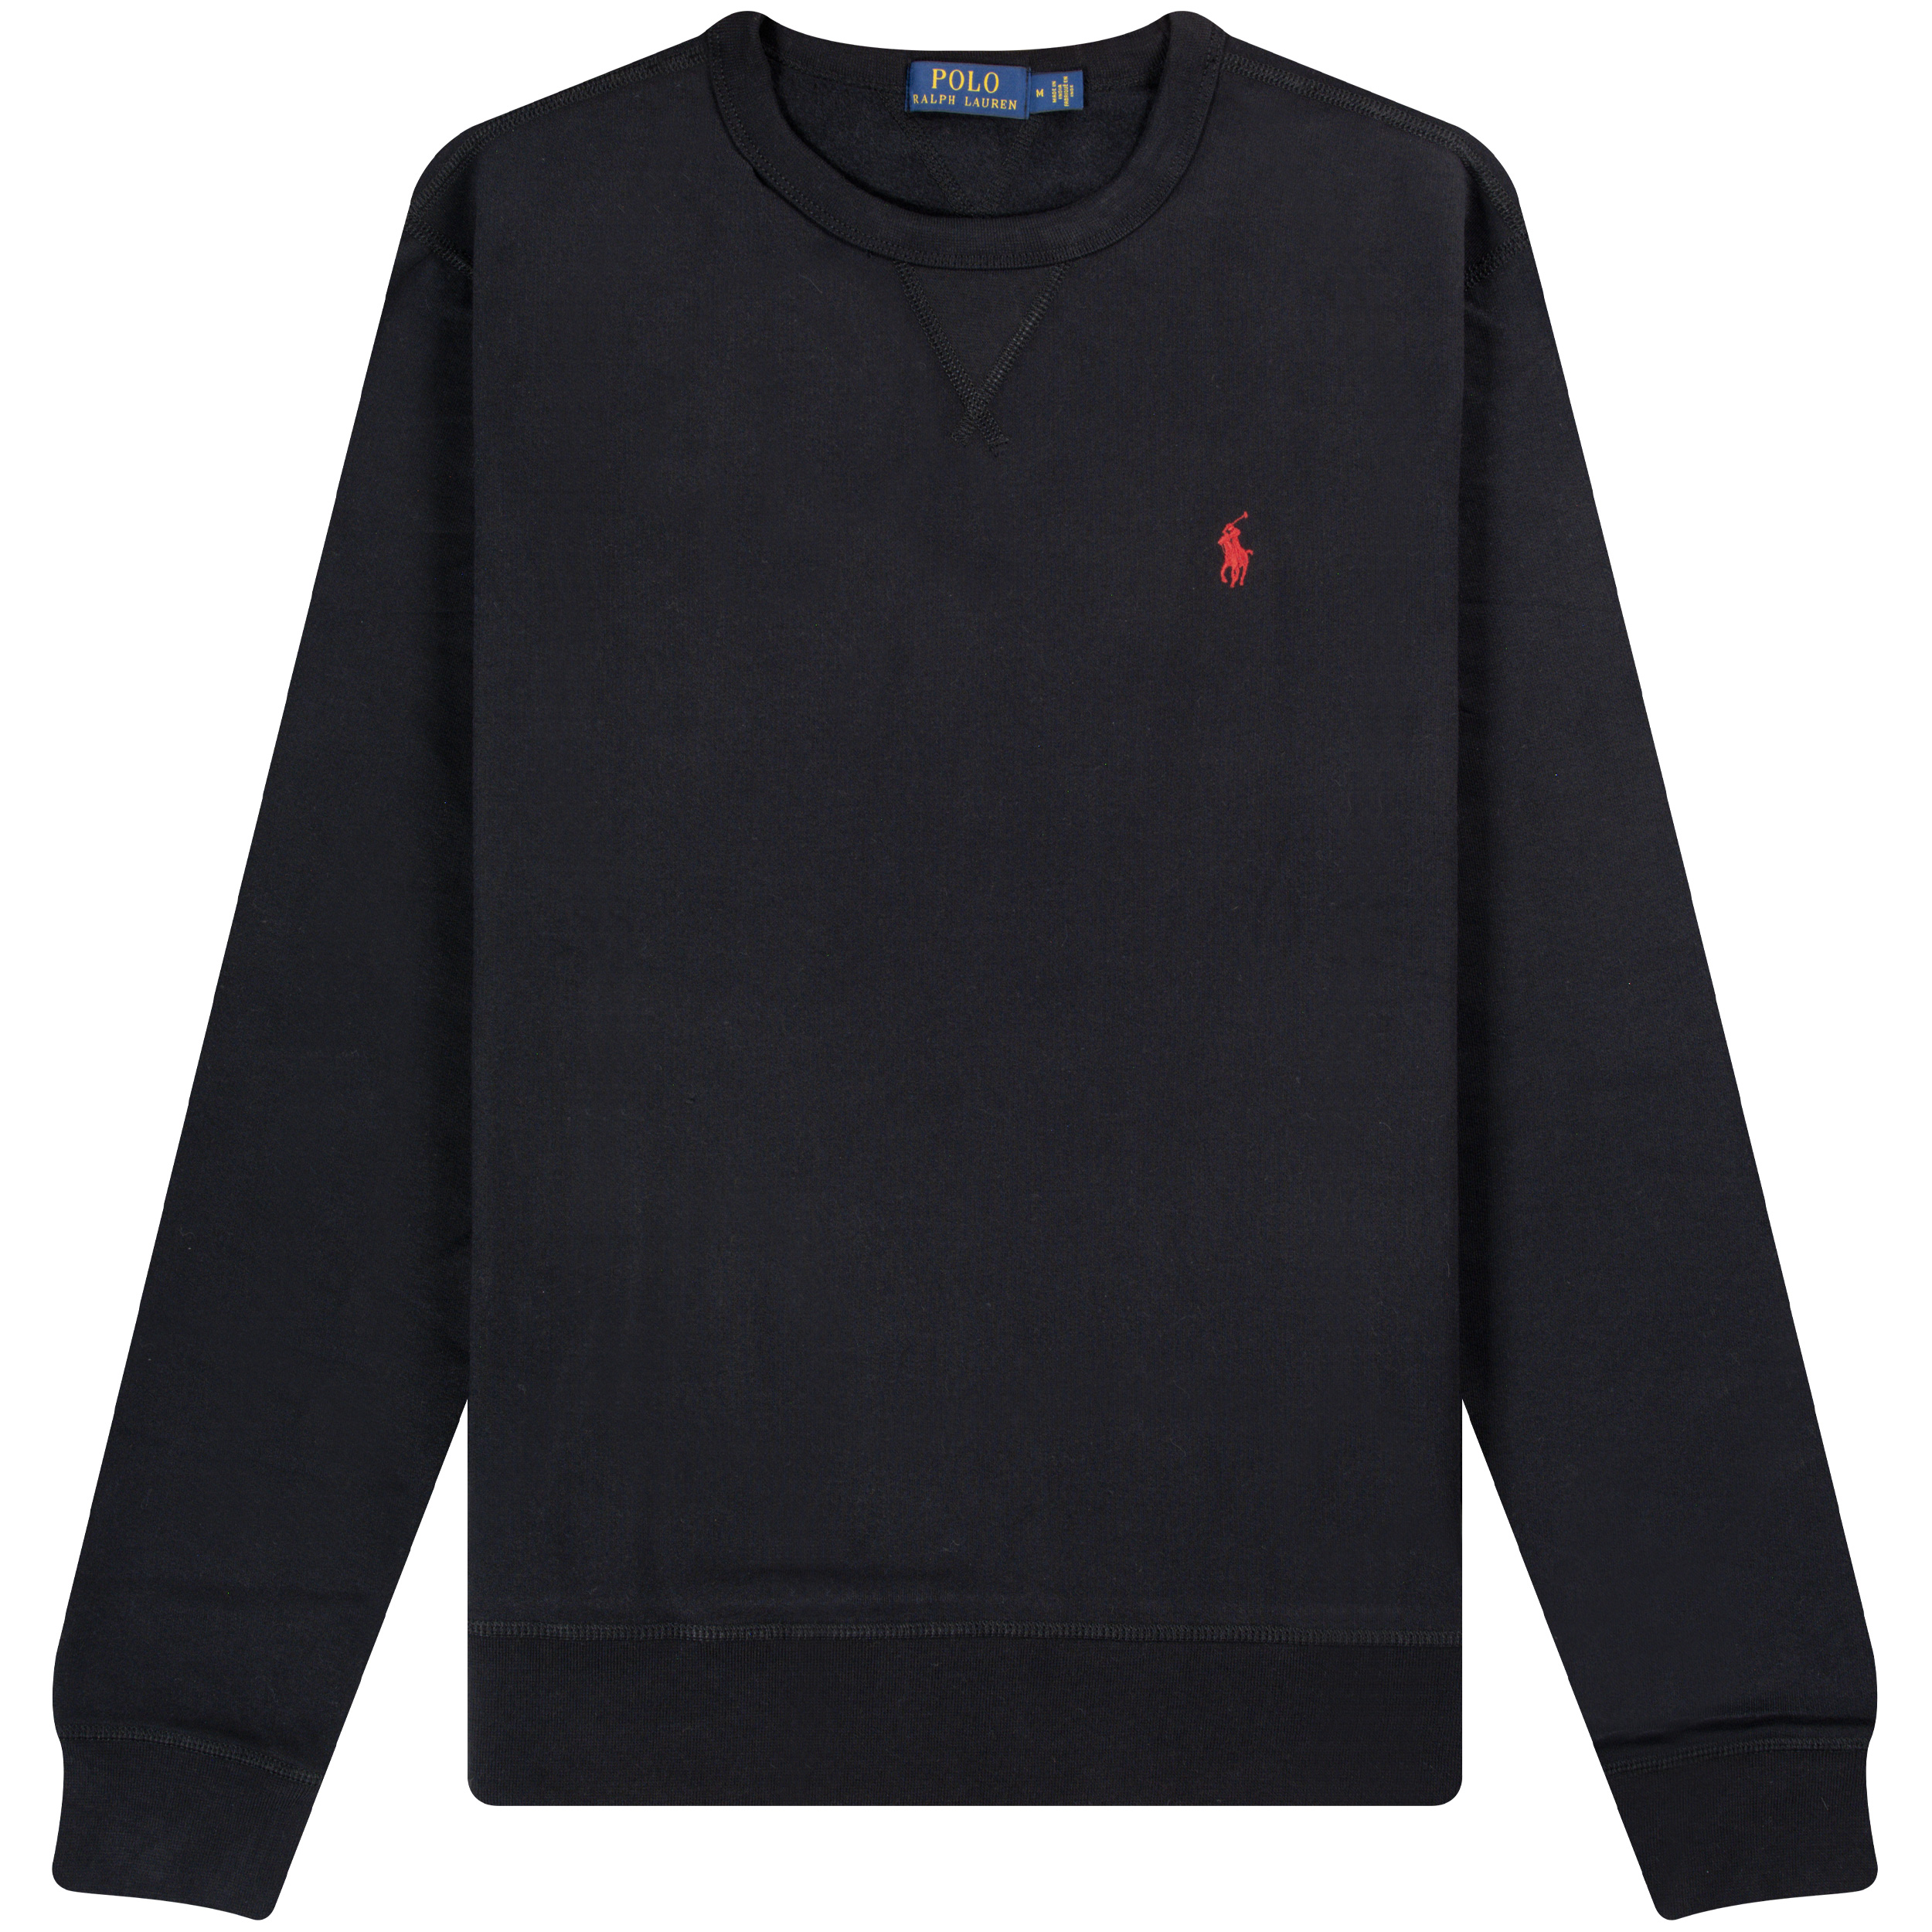 Polo Ralph Lauren ’CORE’ Classic Crewneck Sweatshirt Black